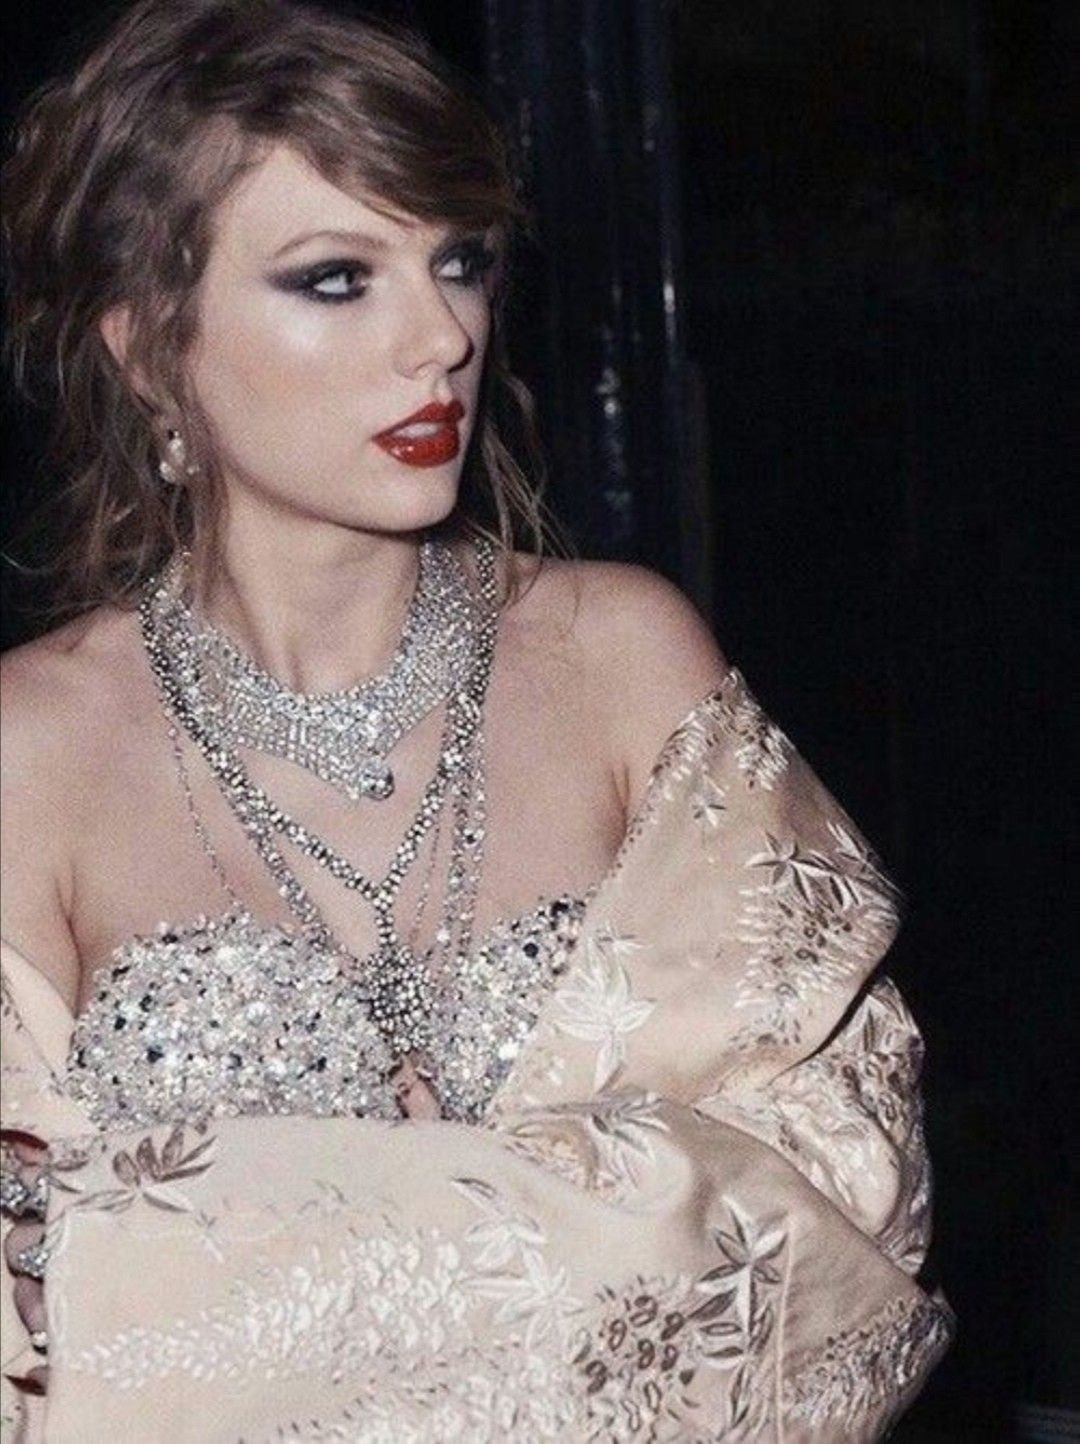 The diamond bath in Taylor Swift's new music video cost $12 million